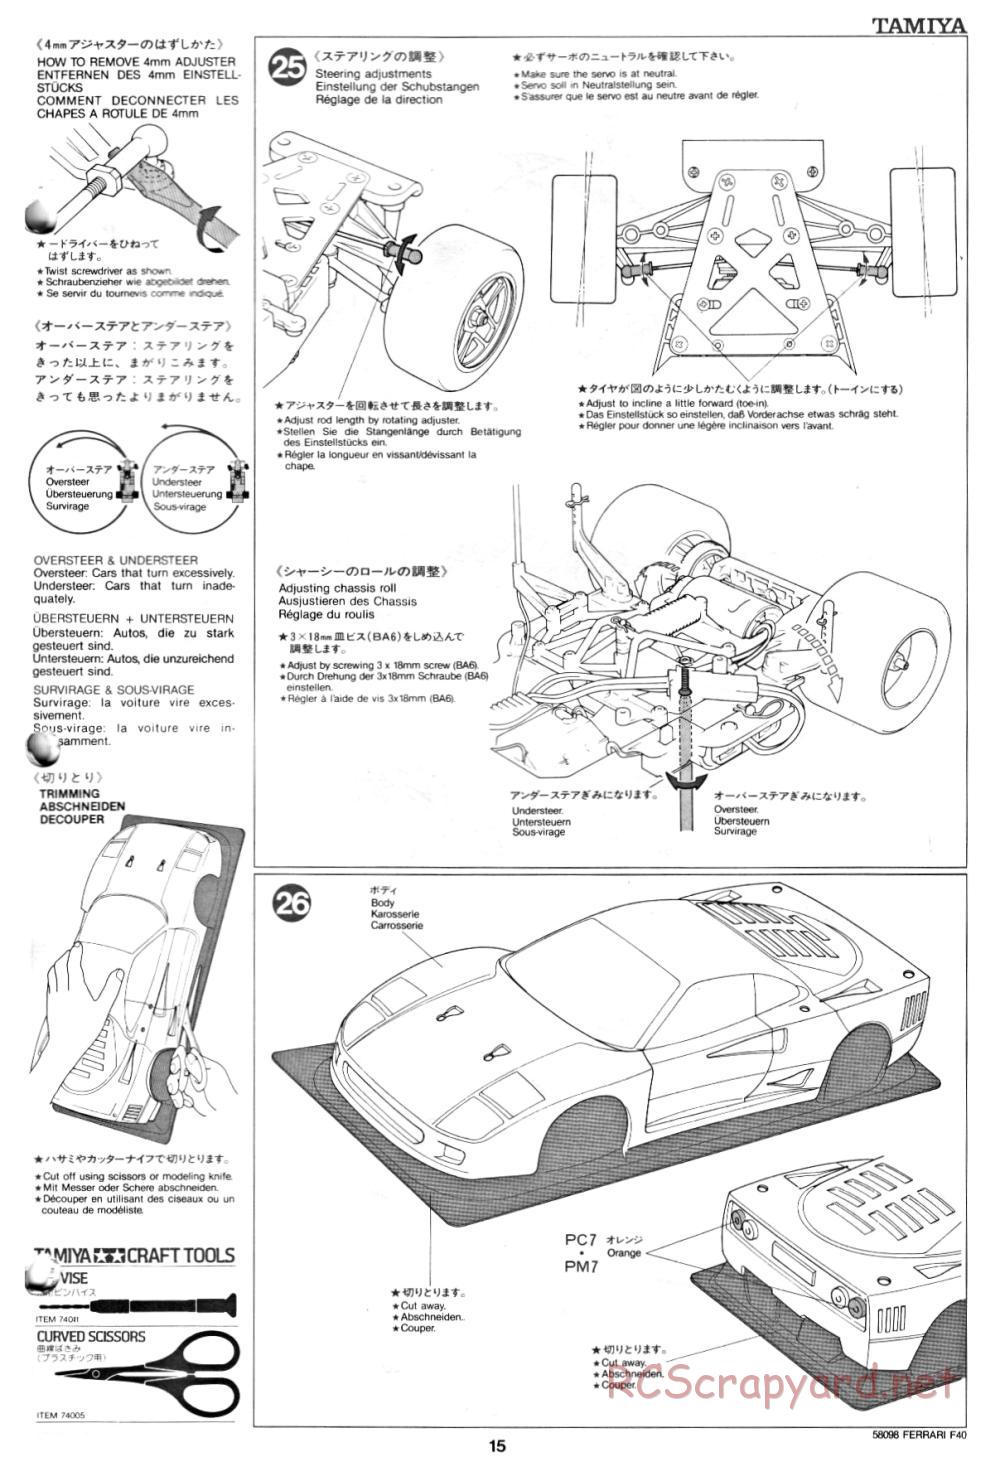 Tamiya - Ferrari F40 - 58098 - Manual - Page 15